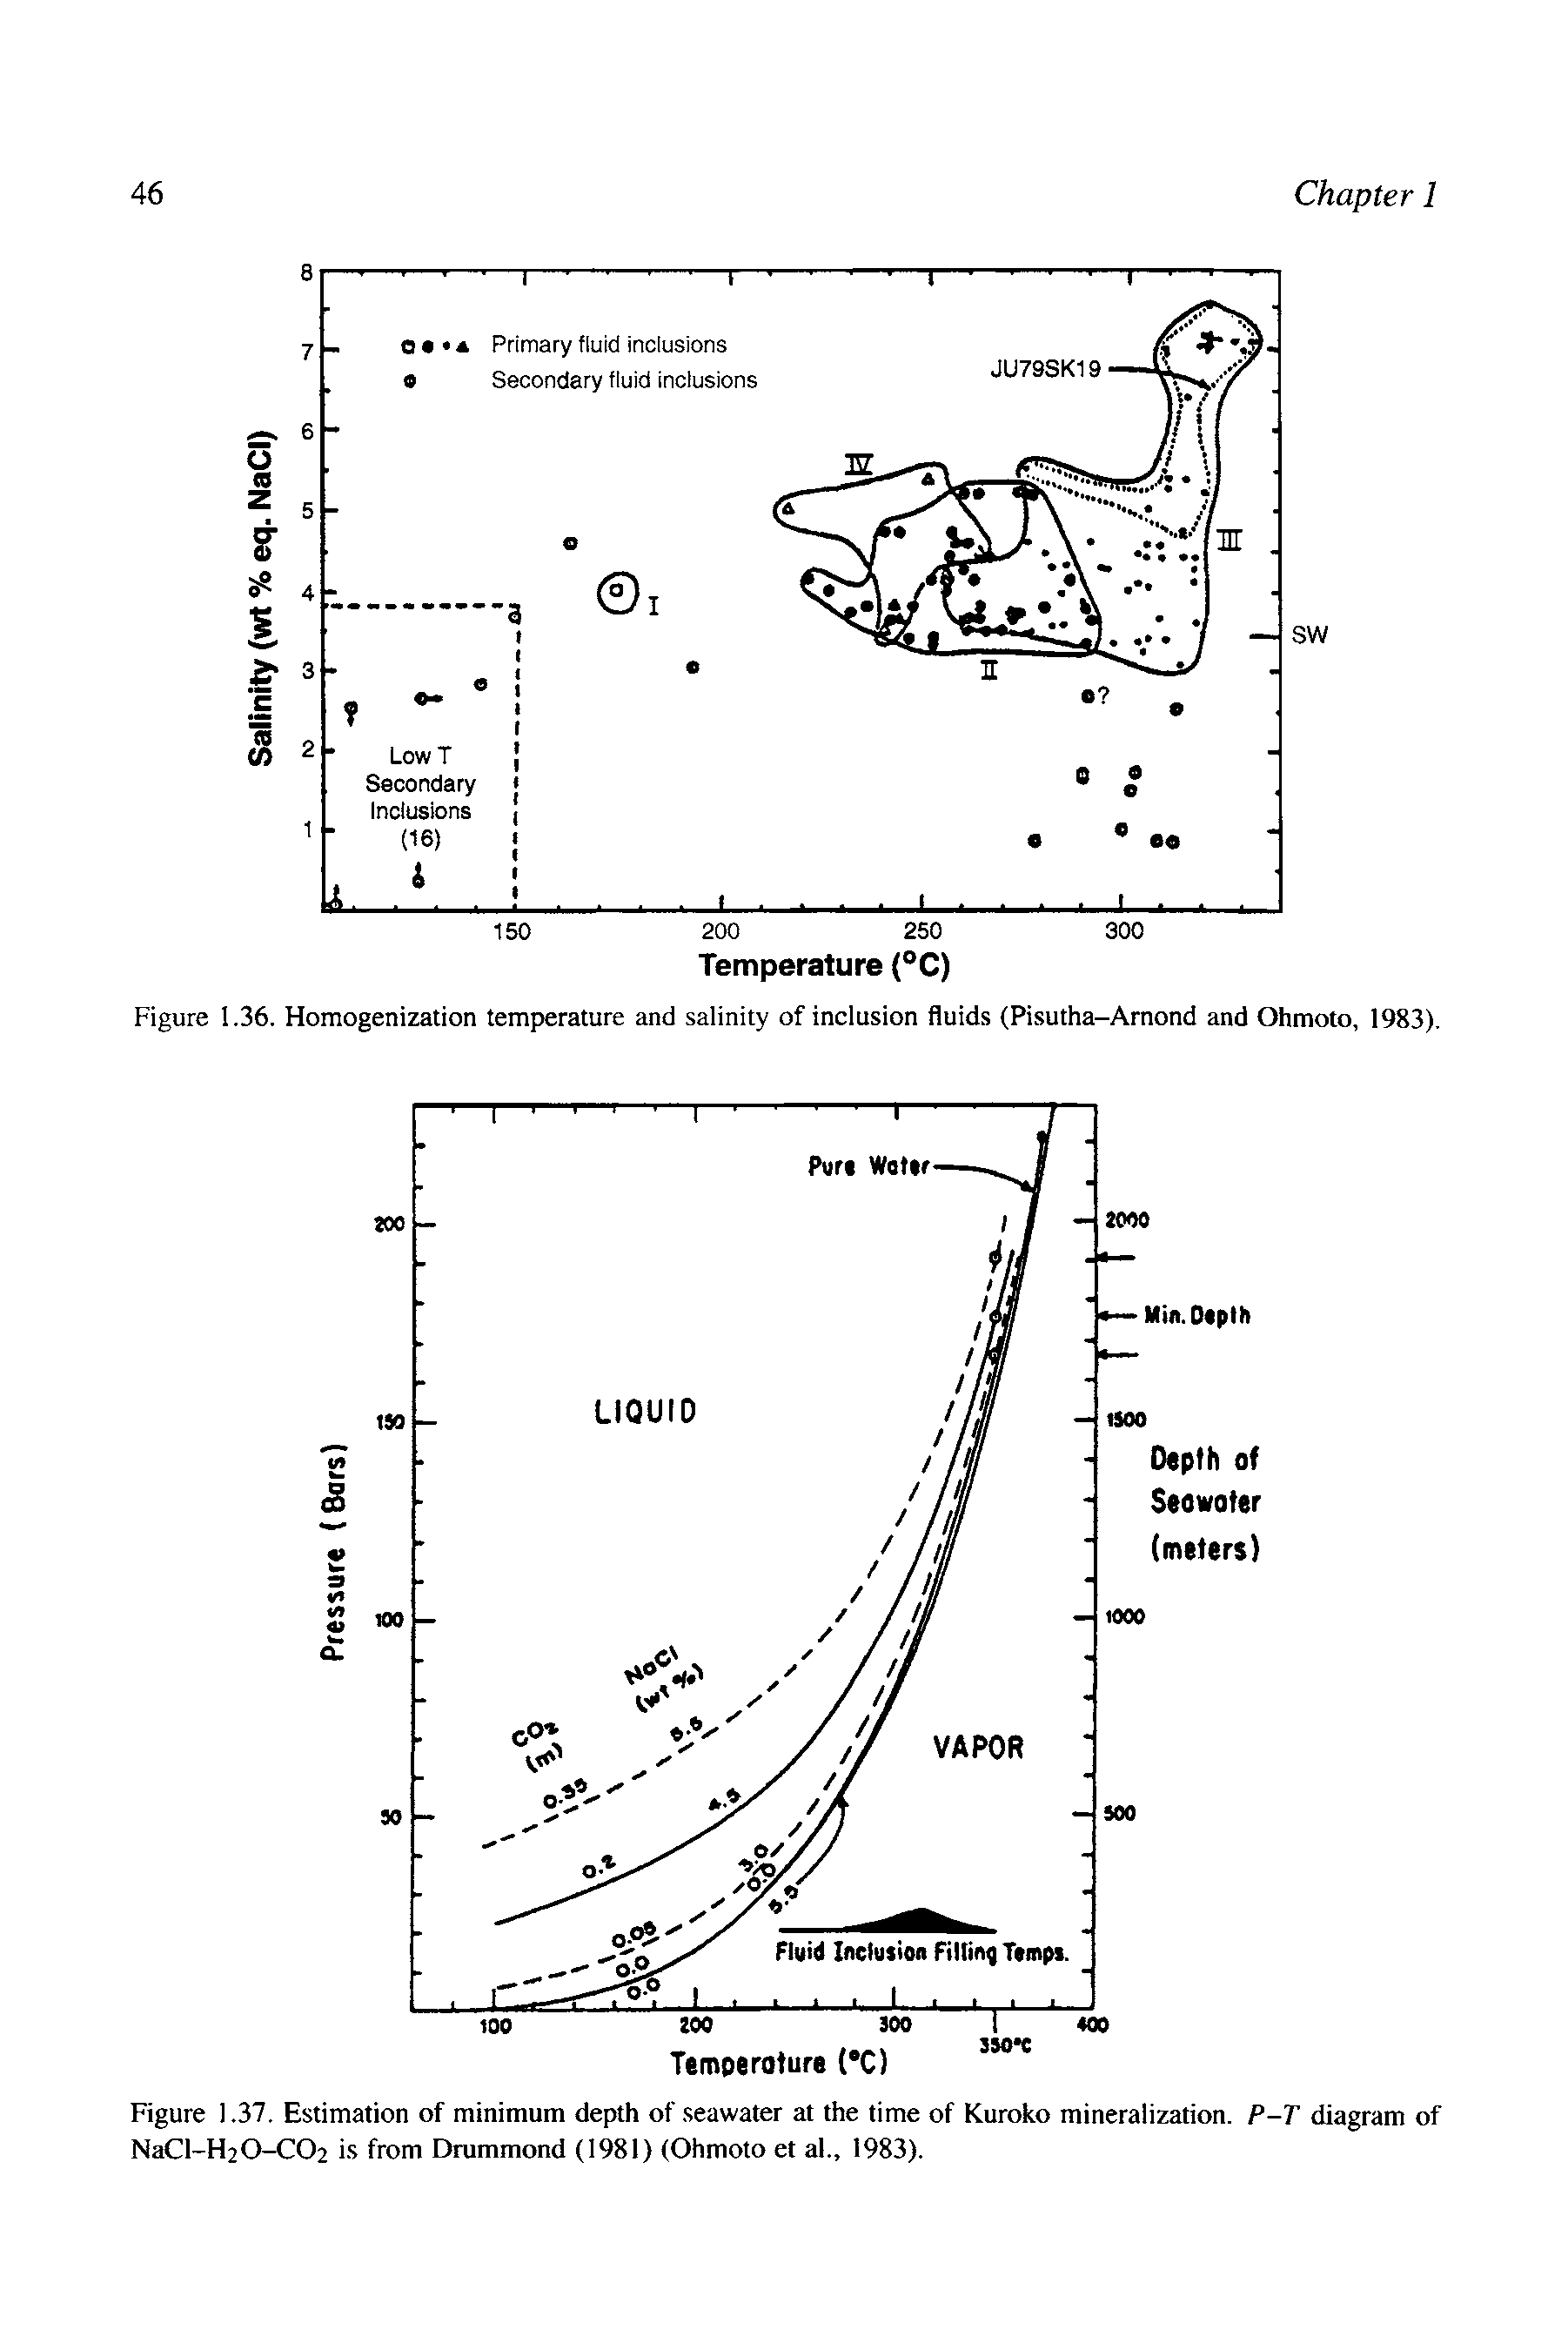 Figure 1.36. Homogenization temperature and salinity of inclusion fluids (Pisutha-Arnond and Ohmoto, 1983).